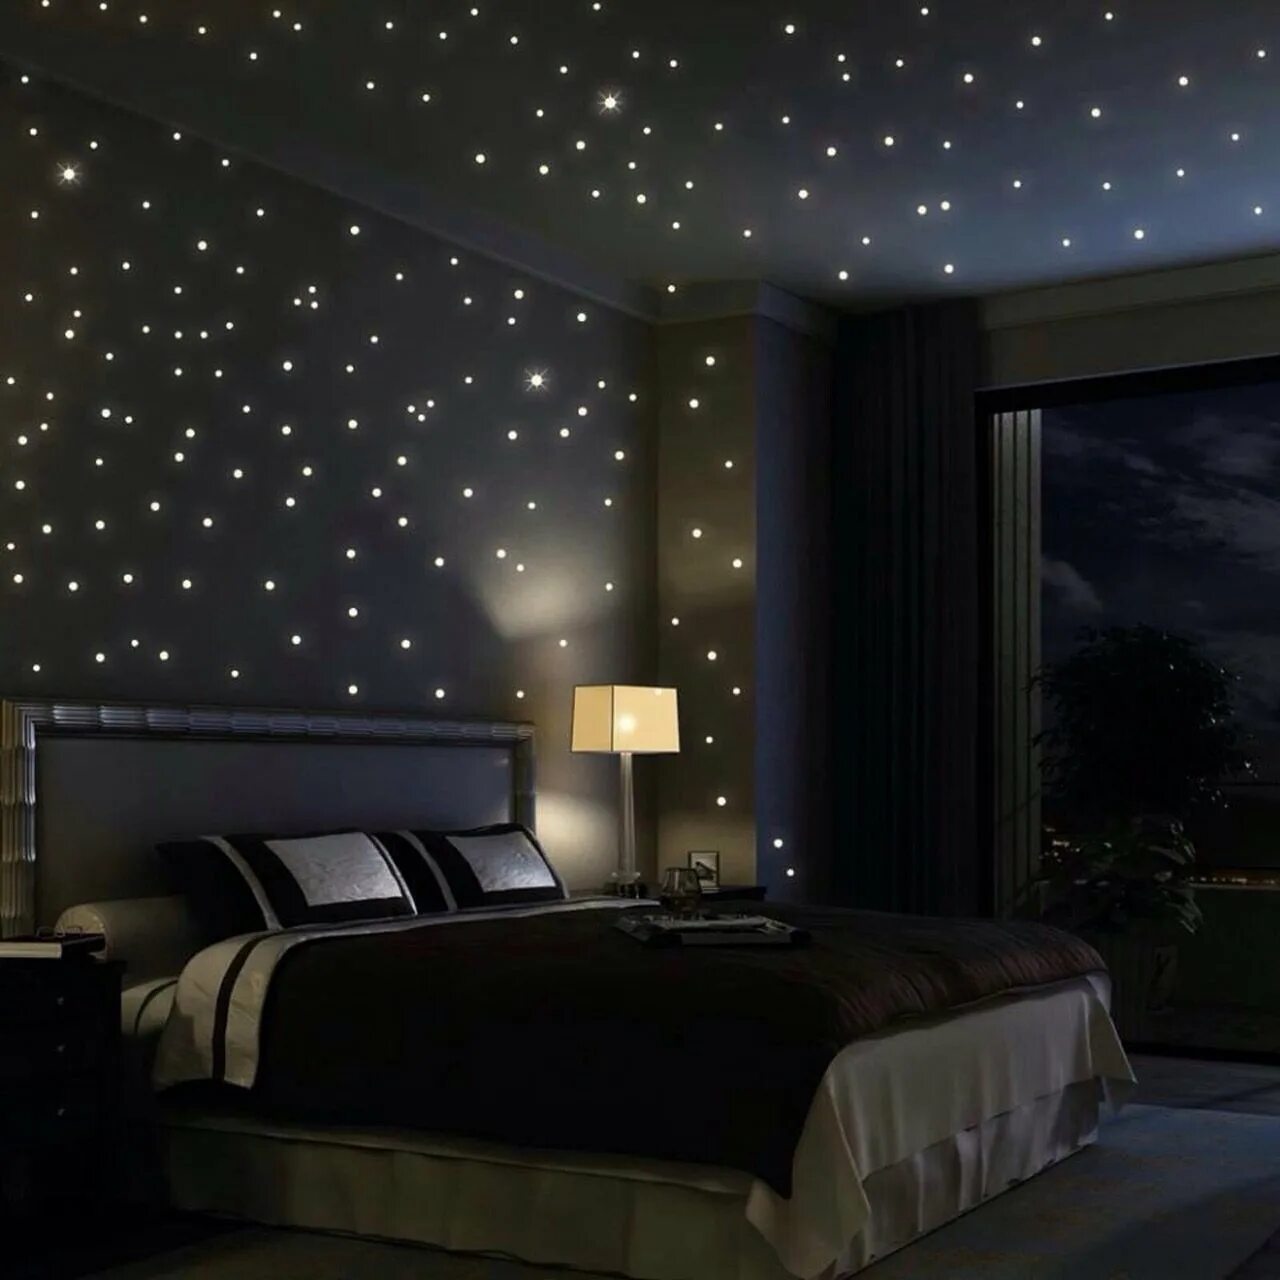 Потолок звездное небо. Потолок звездное небо в спальне. Звездное небо в комнате. Звездный потолок в спальне. Домашнее звездное небо